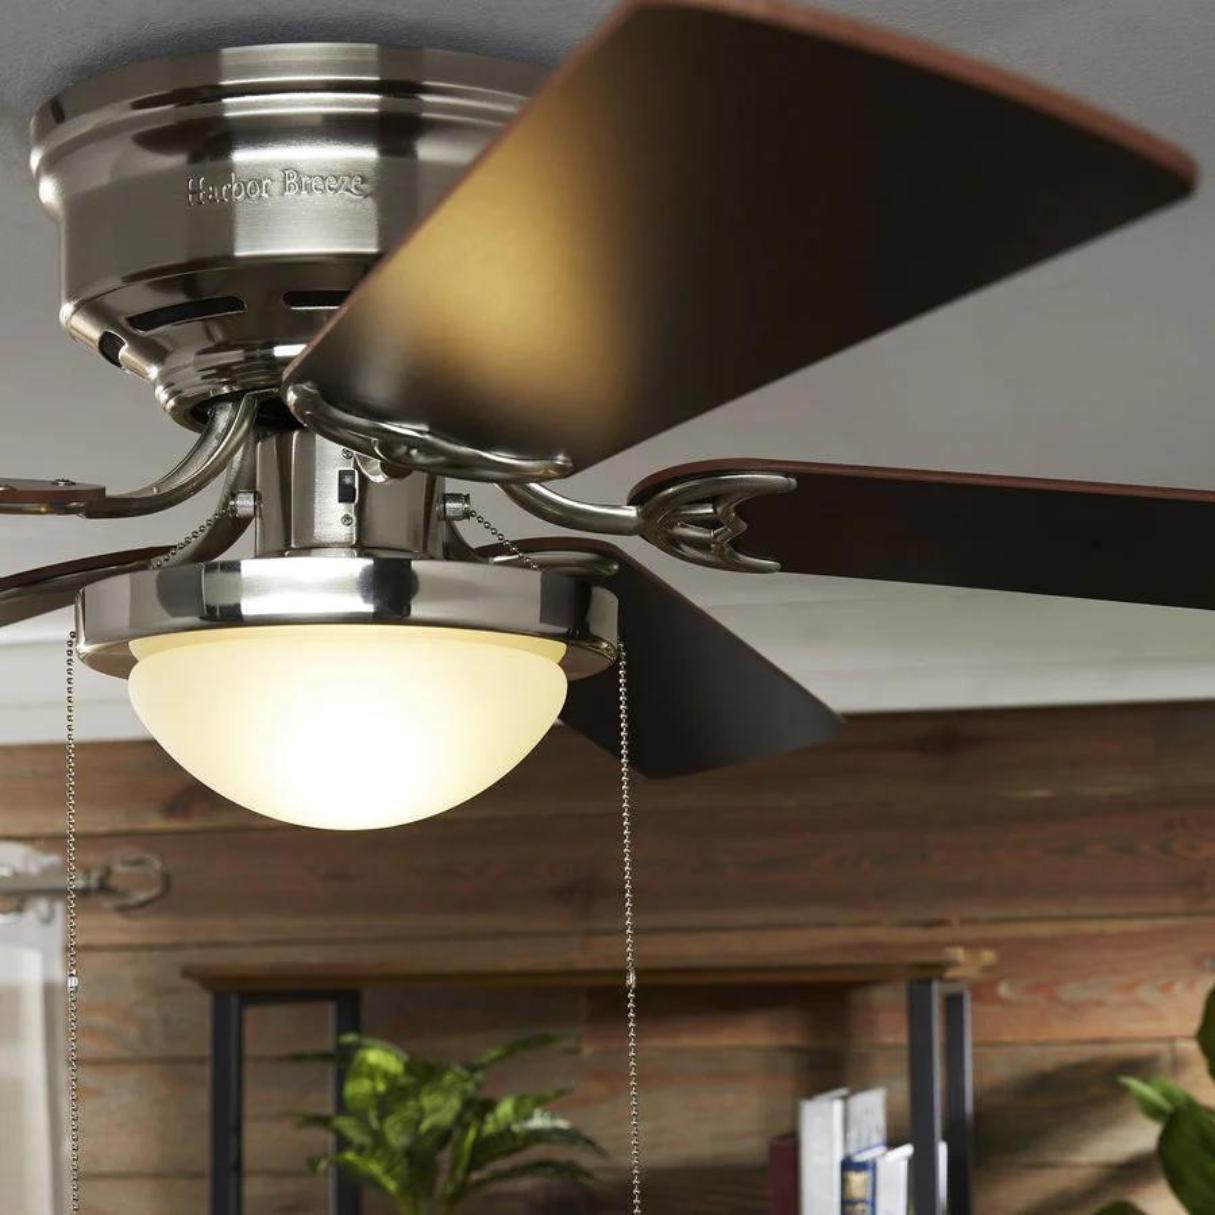 How To Change Light Bulb In A Harbor Breeze Ceiling Fan